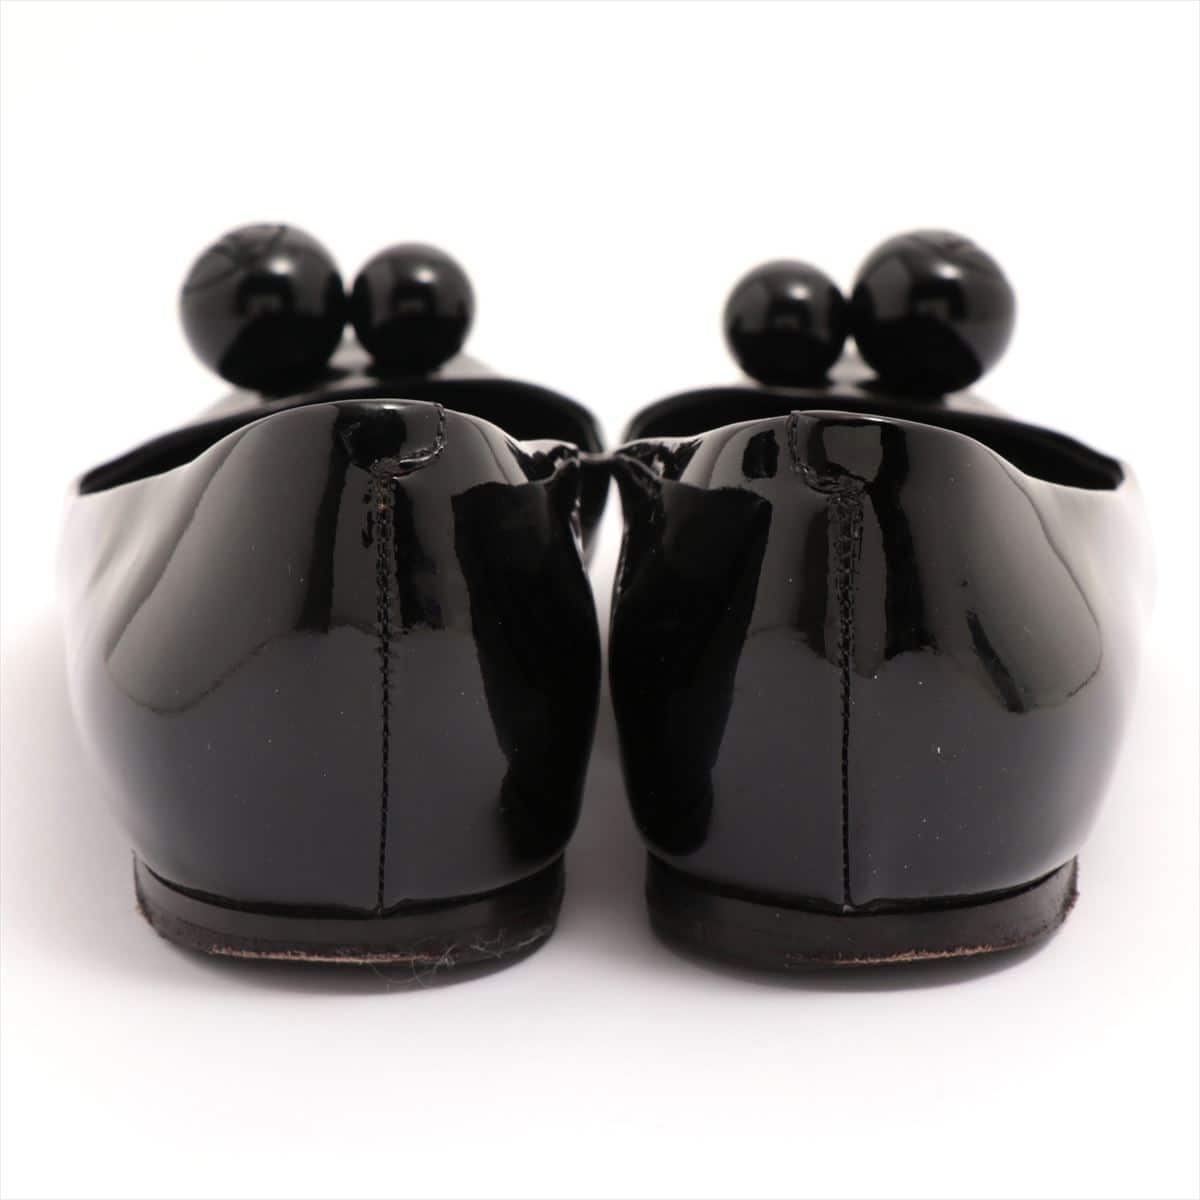 Louis Vuitton NL0175 Patent leather Flat Pumps 36 Ladies' Black logo ball